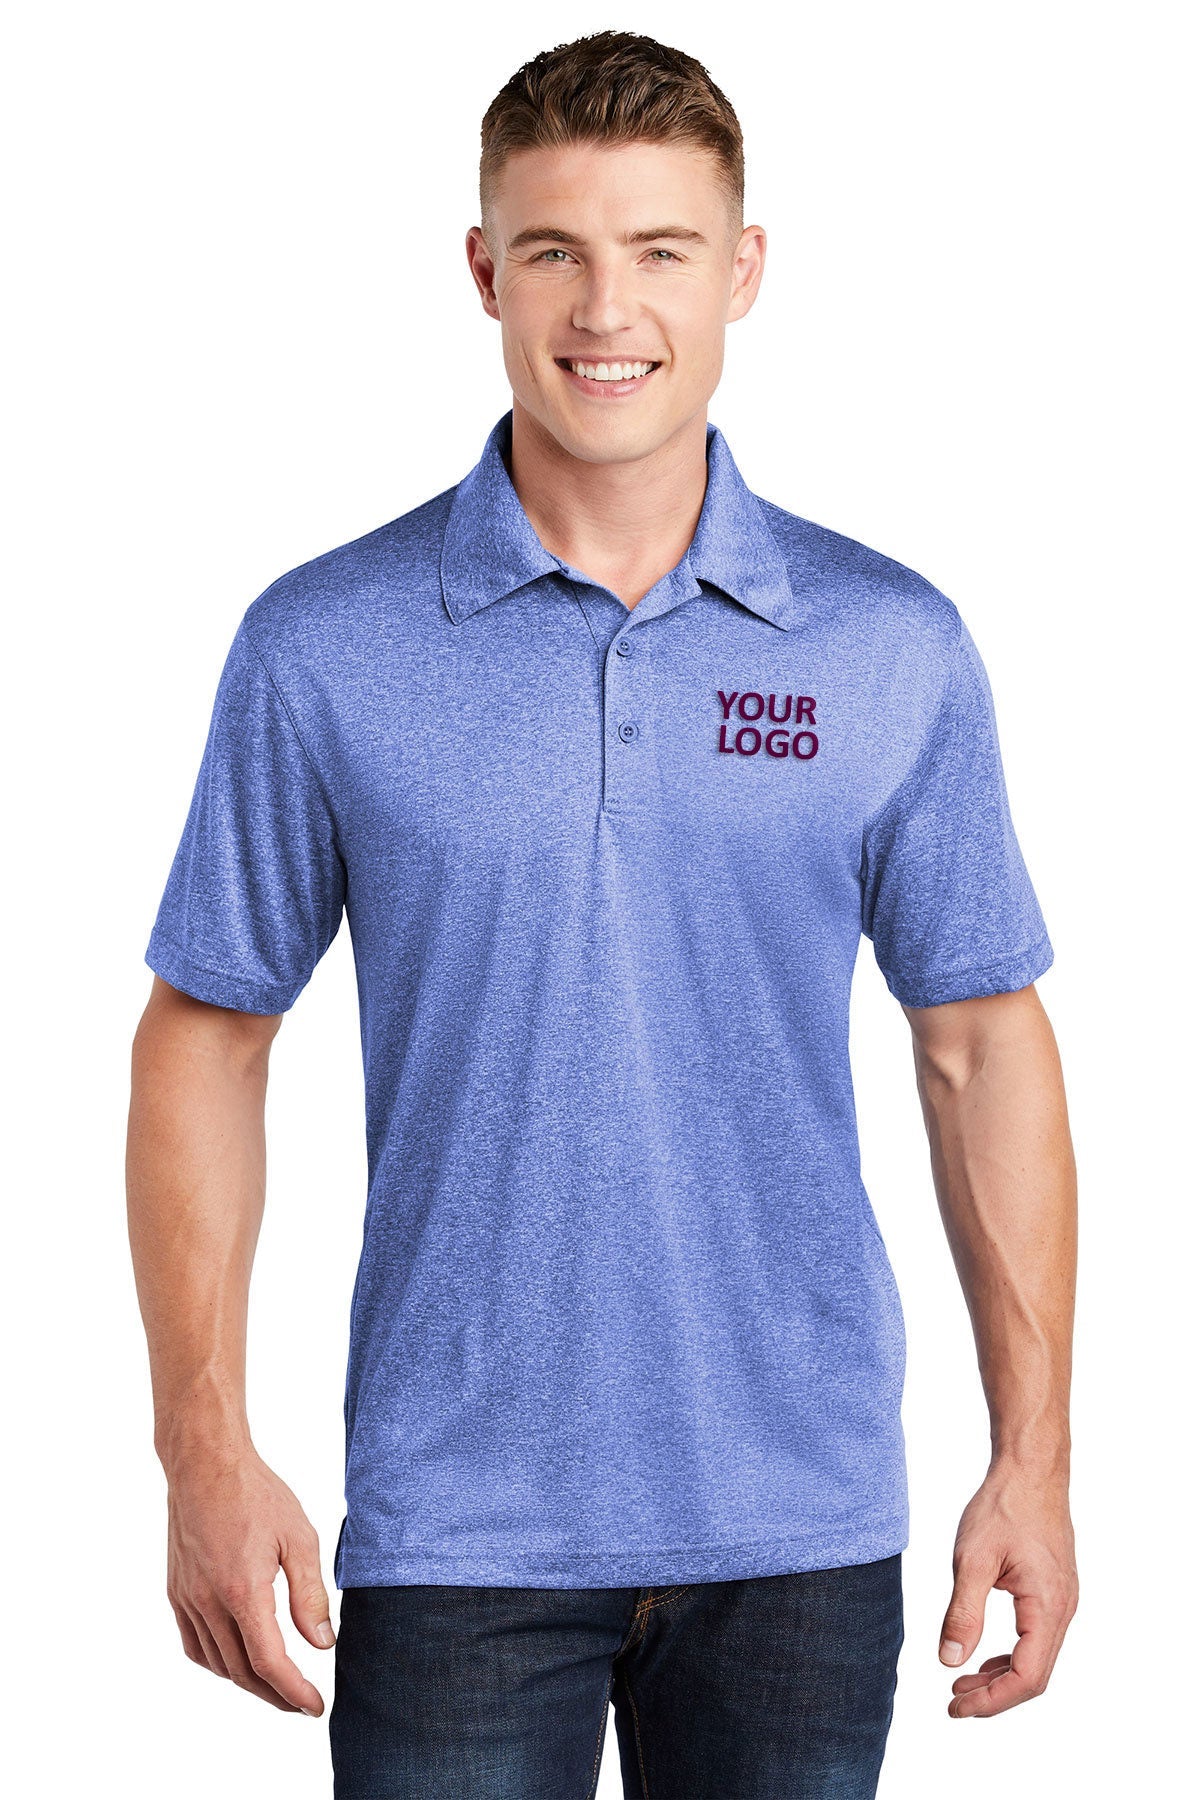 Sport-Tek True Royal Heather ST660 polo shirts company logos